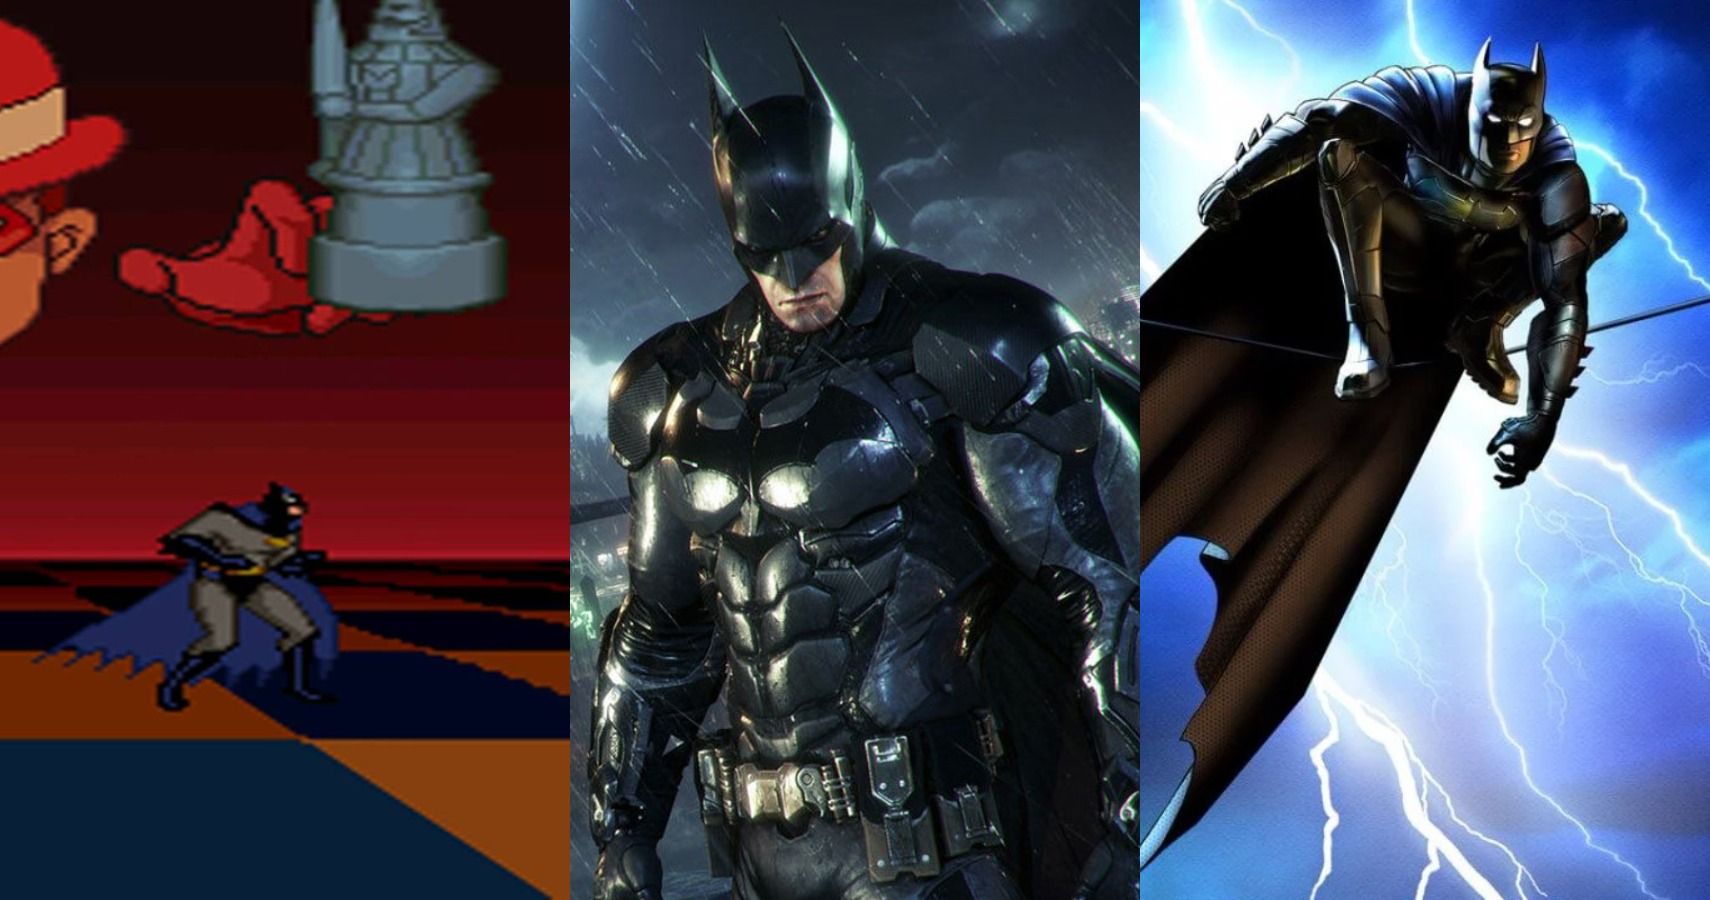 10 Best Batman Video Games That Aren't Arkham-Related, Ranked